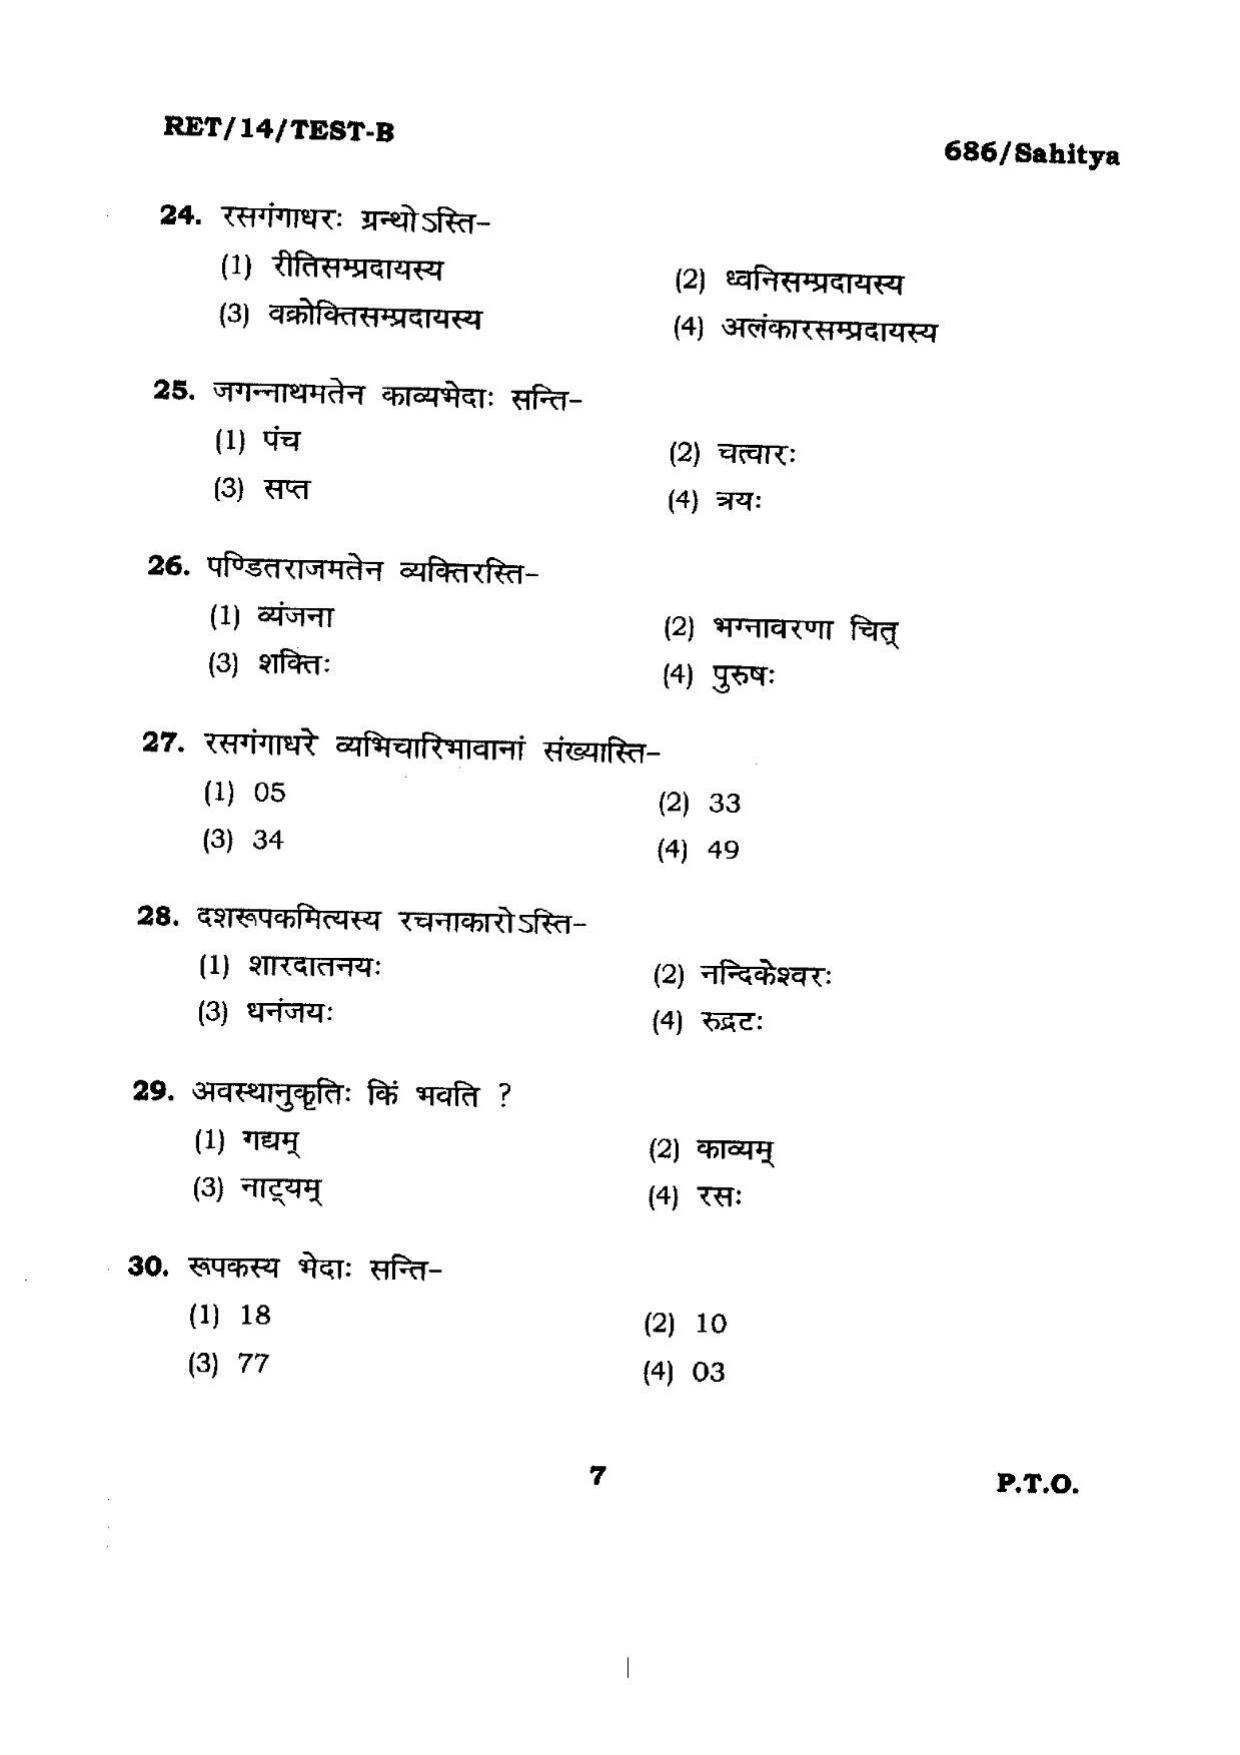 BHU RET Sahitya 2014 Question Paper - Page 7